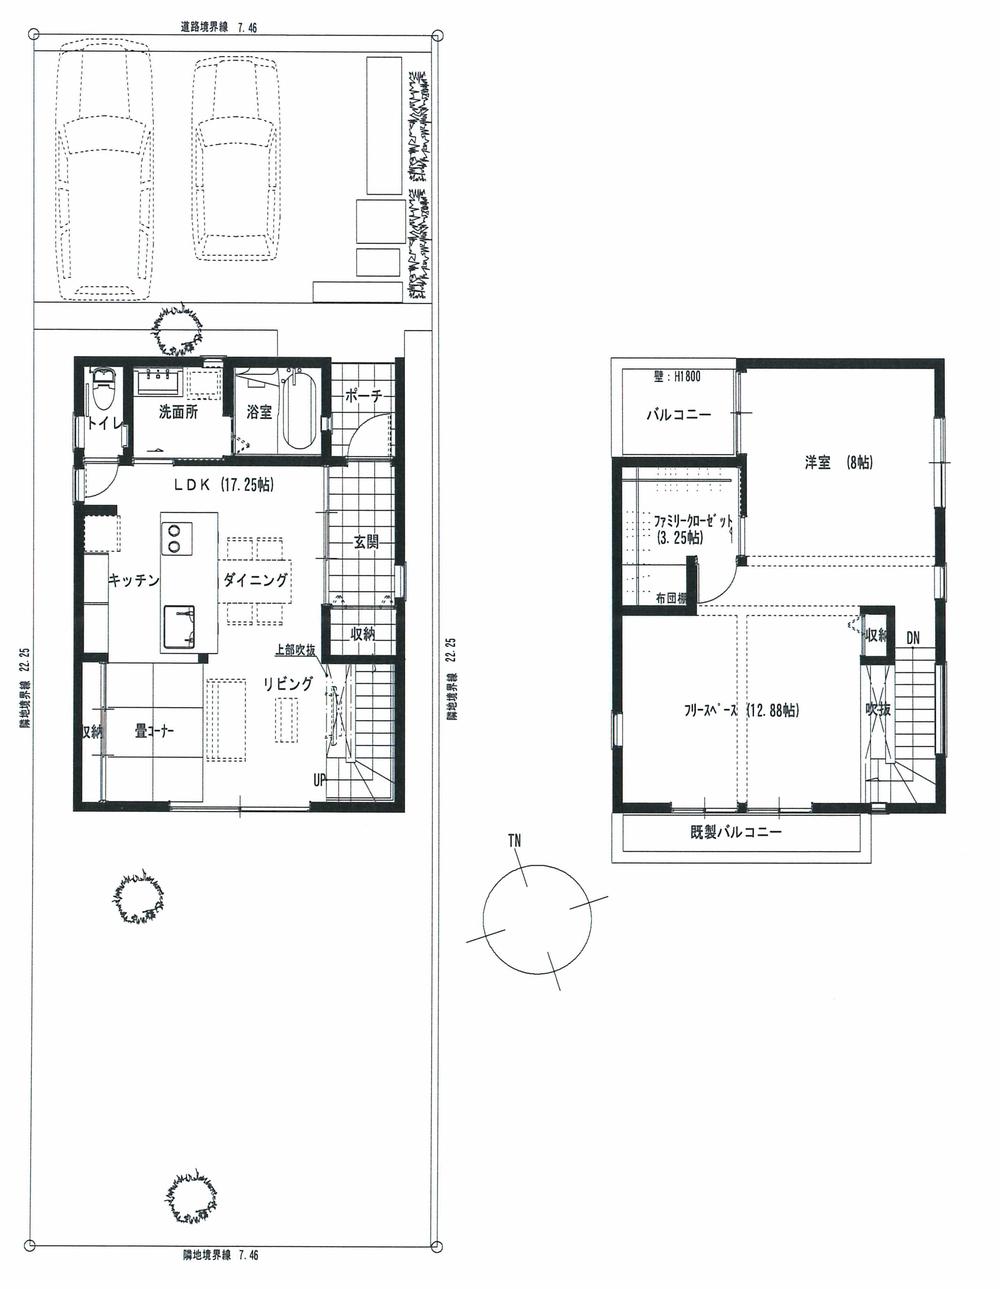 Floor plan. (A), Price 25,850,000 yen, 3LDK+S, Land area 166 sq m , Building area 89.44 sq m